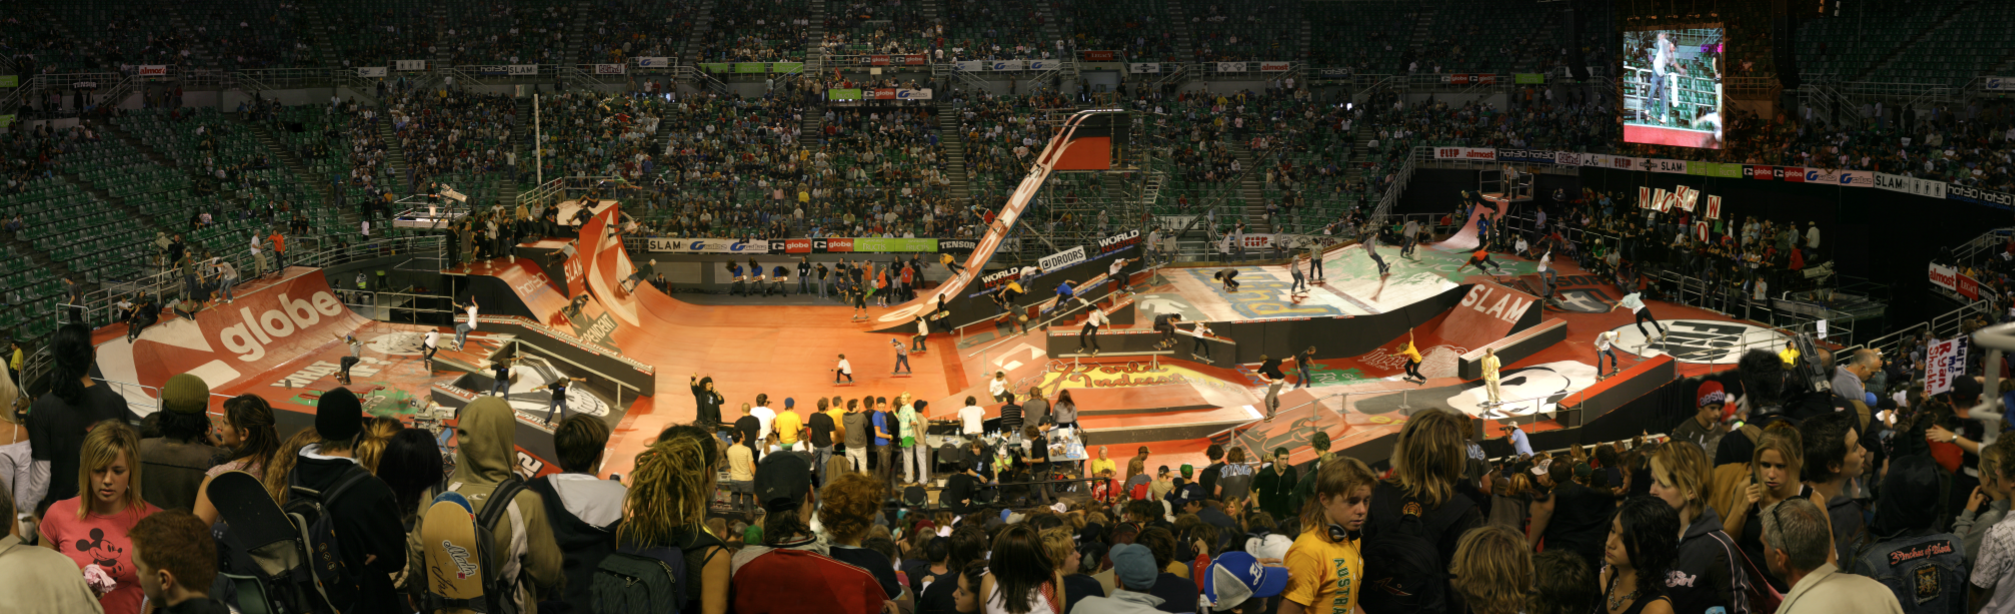 Globe 2005 - skating championships (summary)